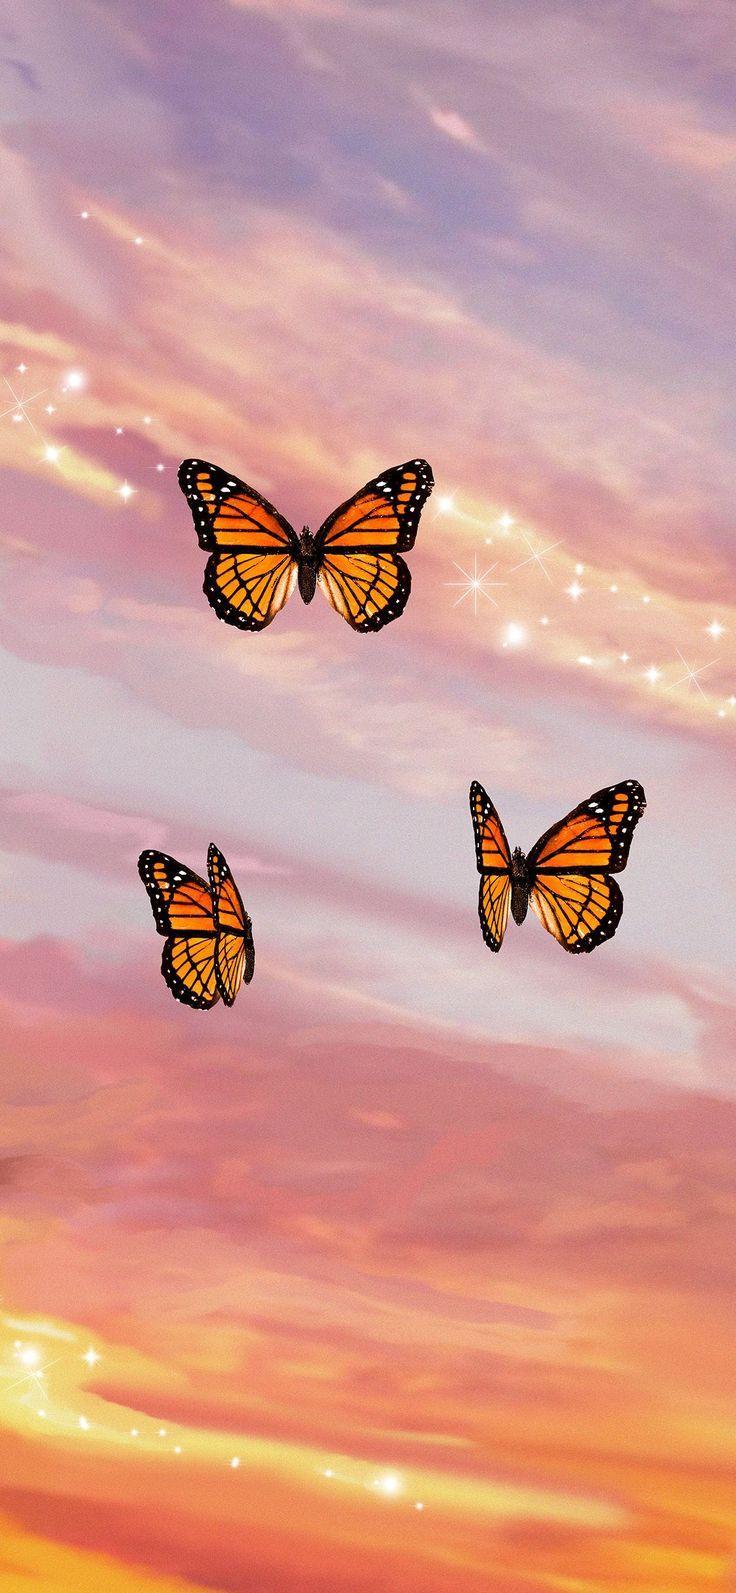 Aesthetic Orange Butterfly Wallpapers - Top Free Aesthetic Orange ...